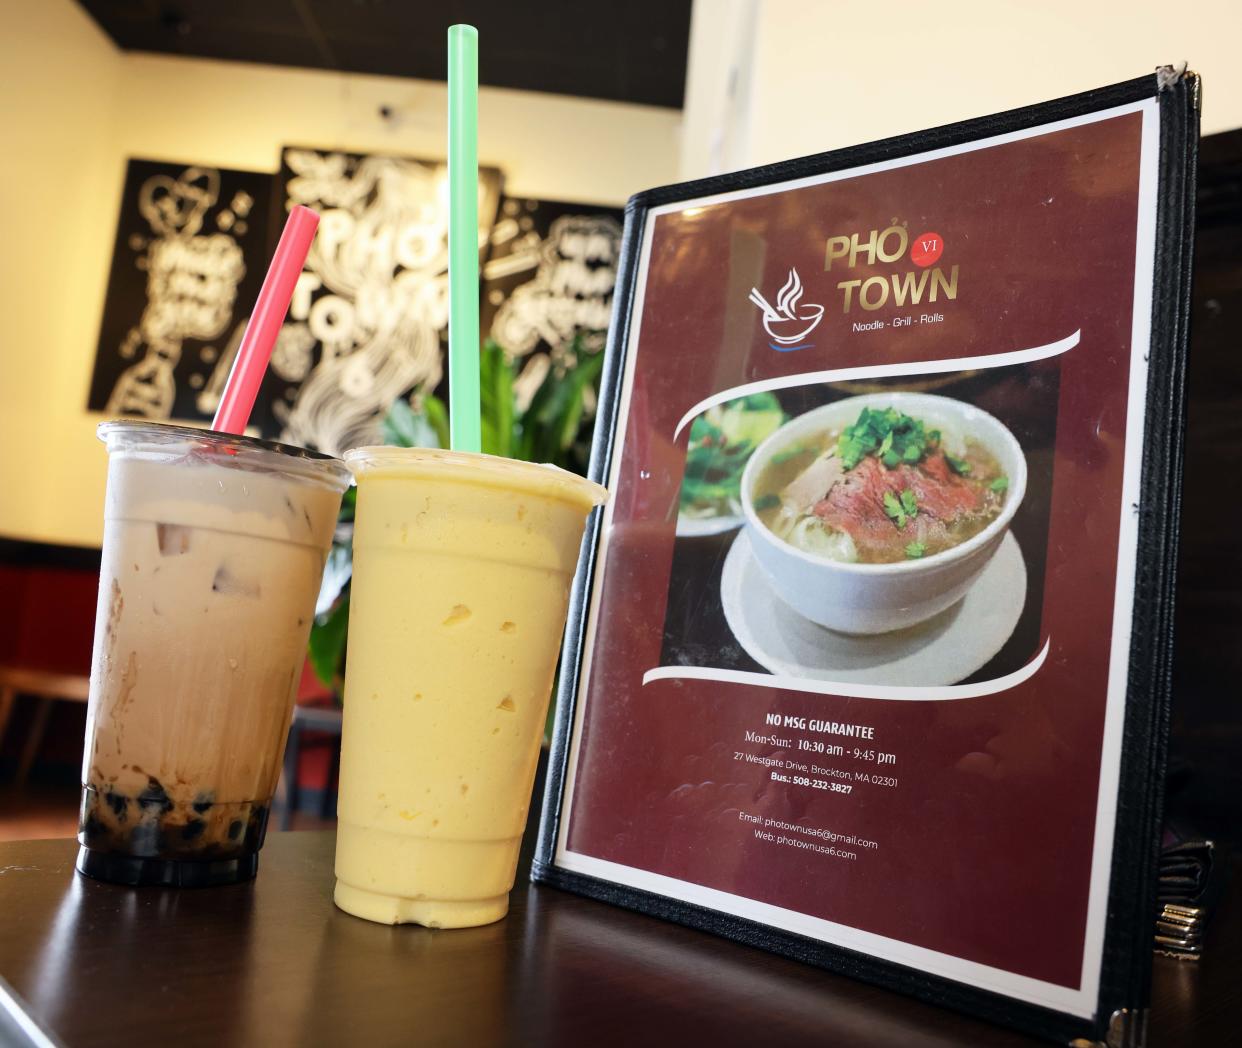 Pho Town 6 Vietnamese restaurant, 27 Westgate Drive, Brockton, on Wednesday, Sept. 21, 2022.